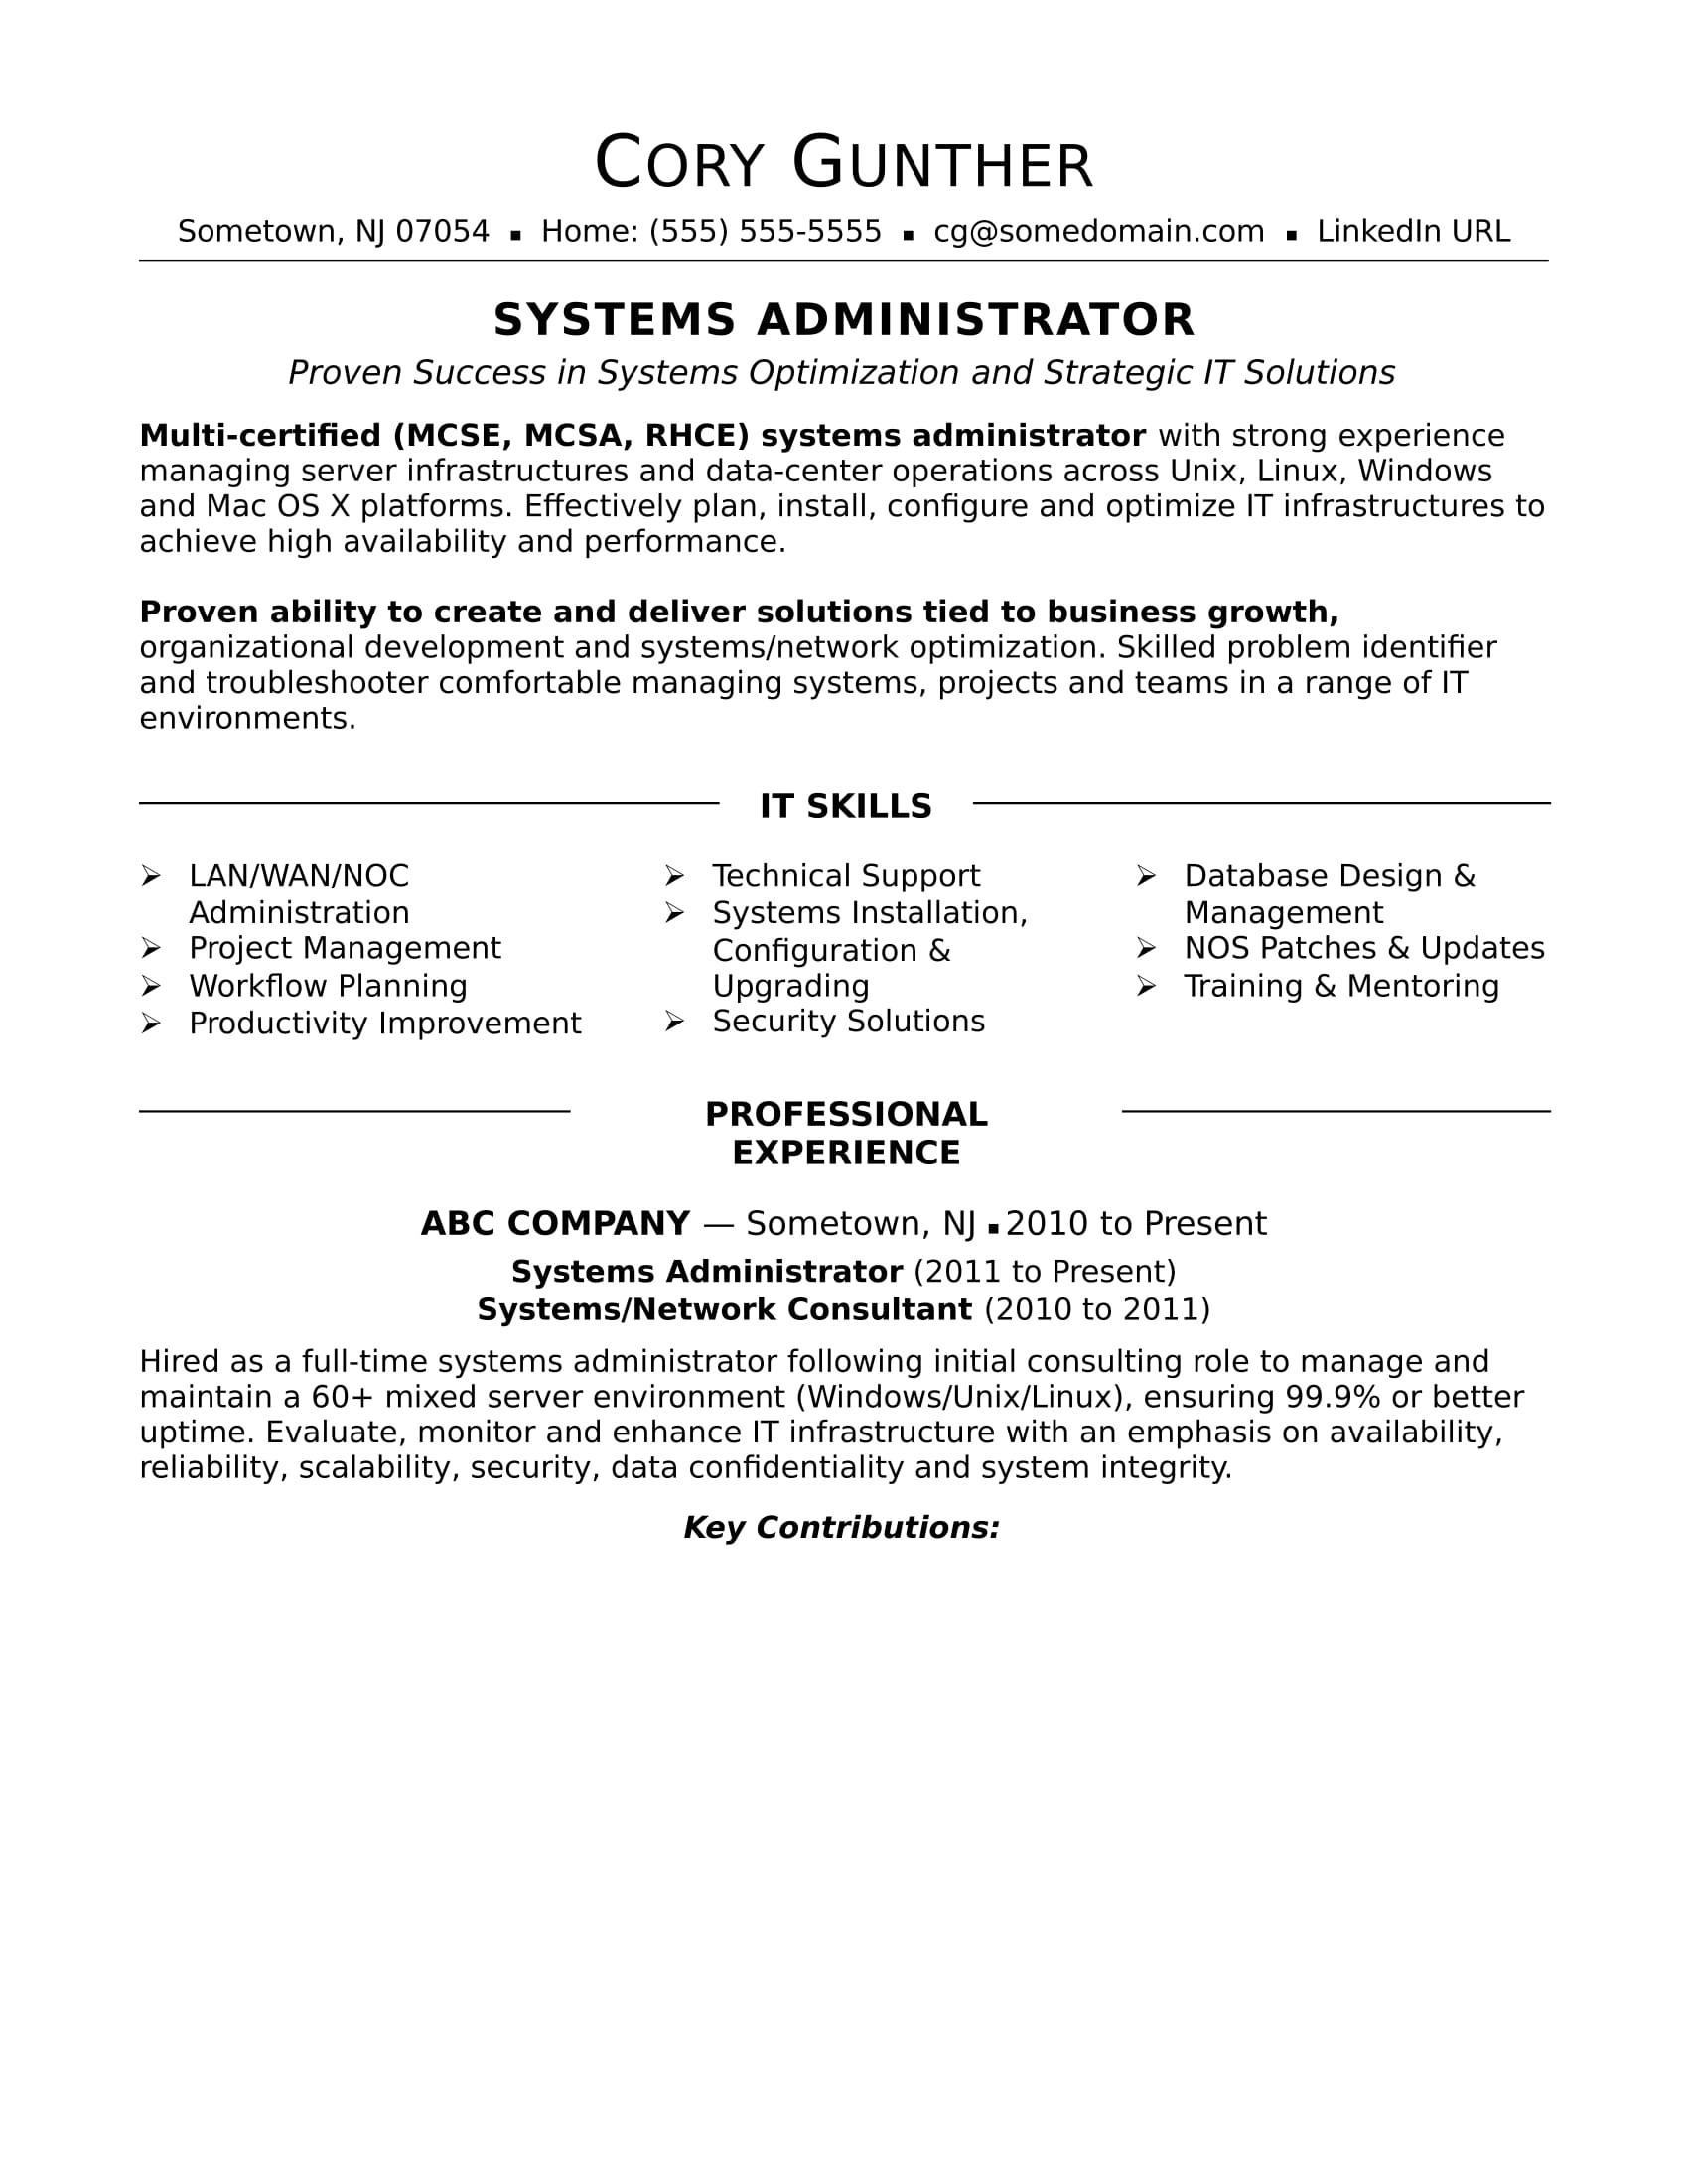 Sample Resume for Server In Senior Home Sample Resume for An Experienced Systems Administrator Monster.com